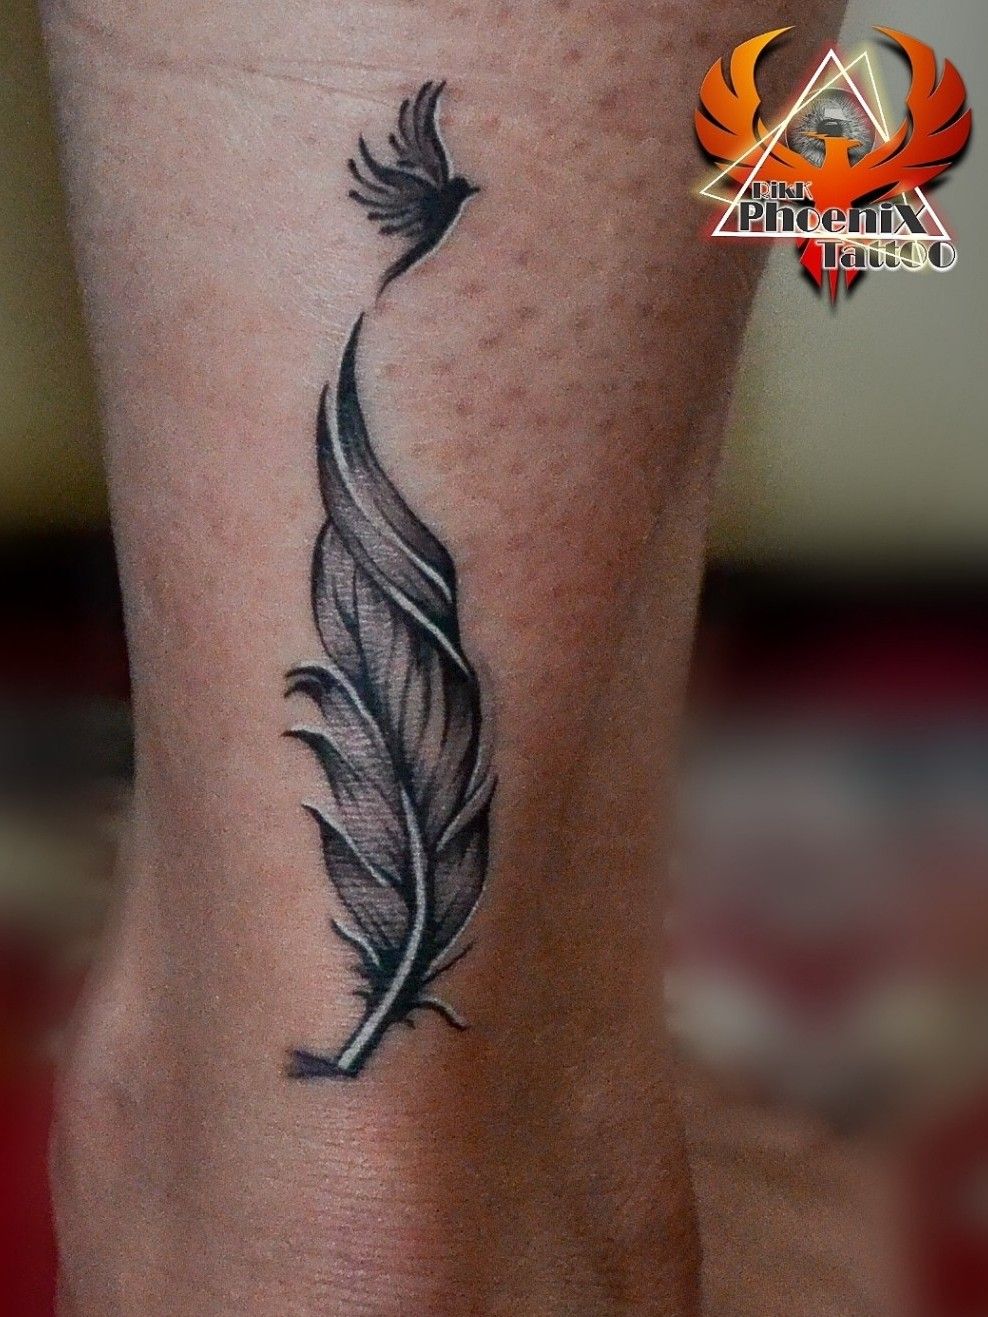 Tattoo uploaded by Rikk Phoenix Tattoo • #feather #bird #legtattoo #anklets  #ankletattoo #cleanlines #cleanlinetattoo #neattattoo #qualitytime # besttattoo #chandigarh #tattooartist #chandigarhtattoos #feathertattoo  #stencilart #realismtattoo #best ...